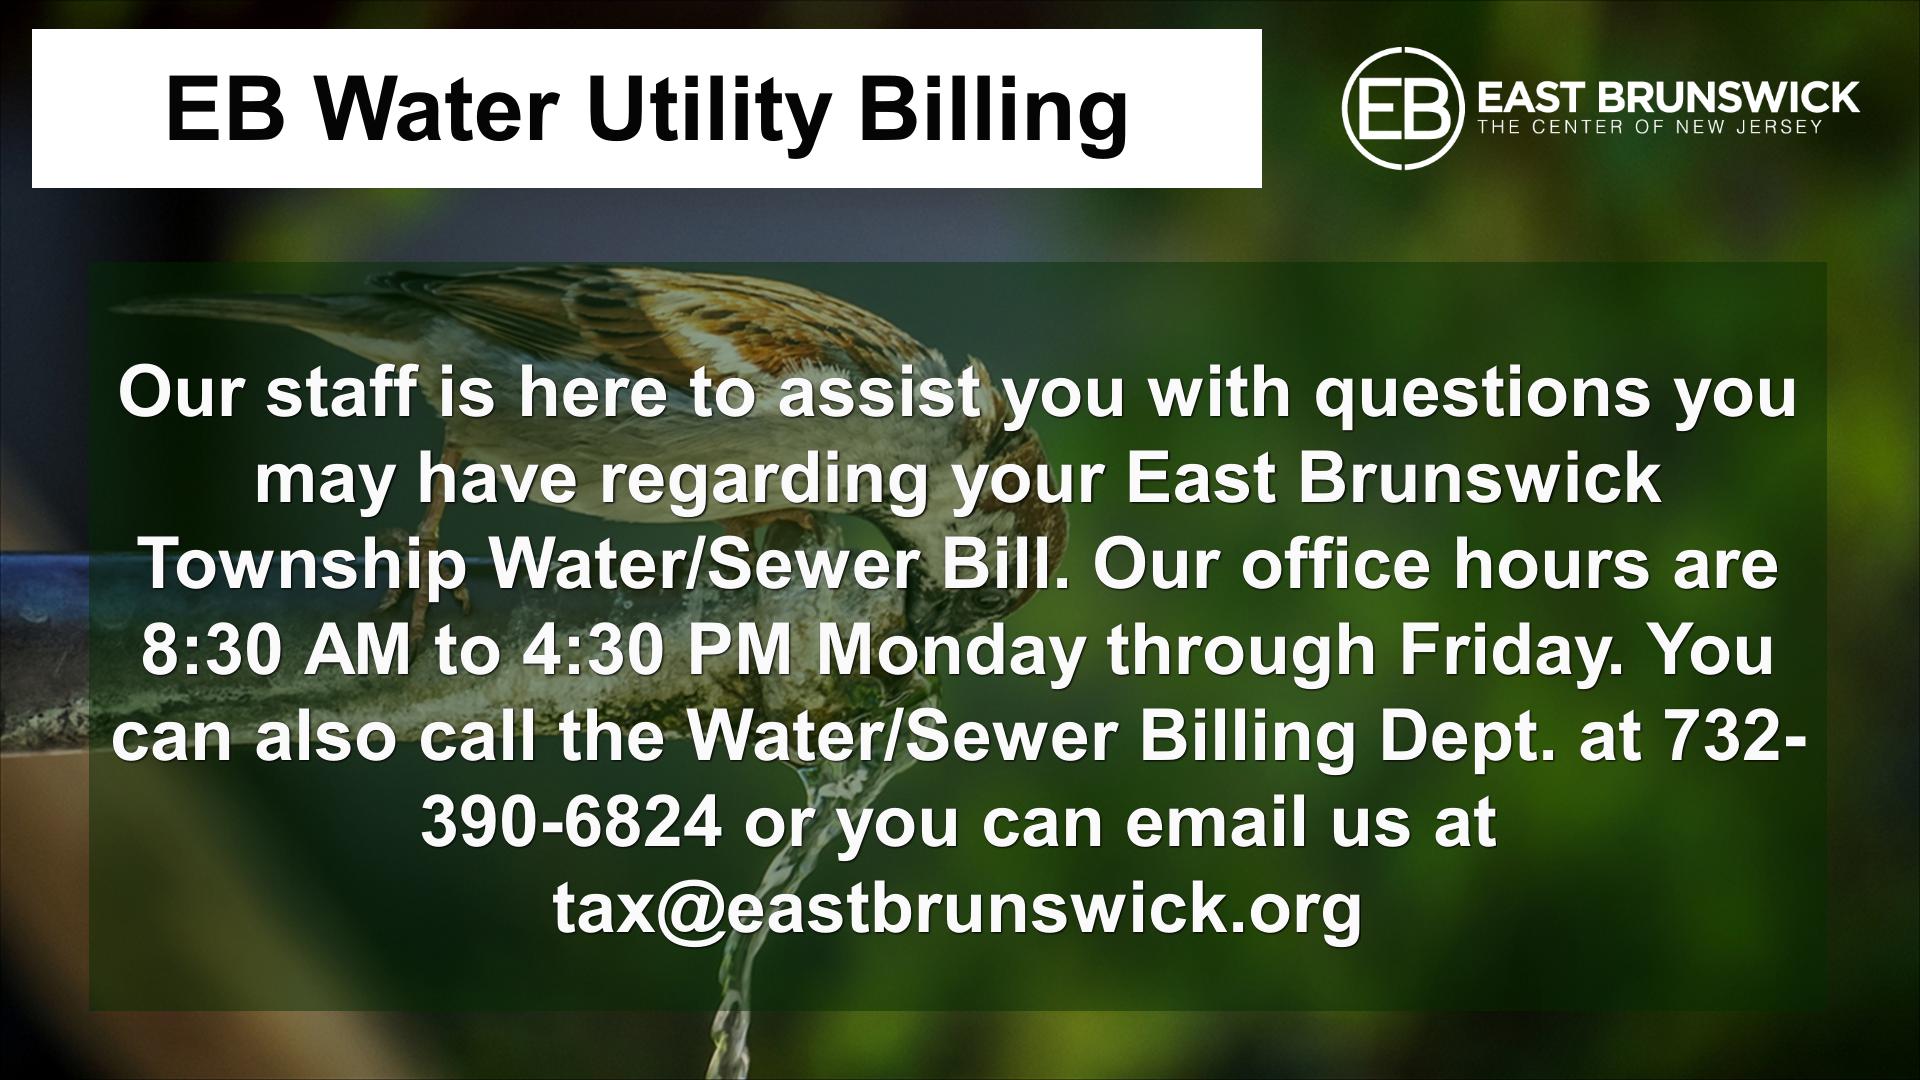 EB Water Utility Billing